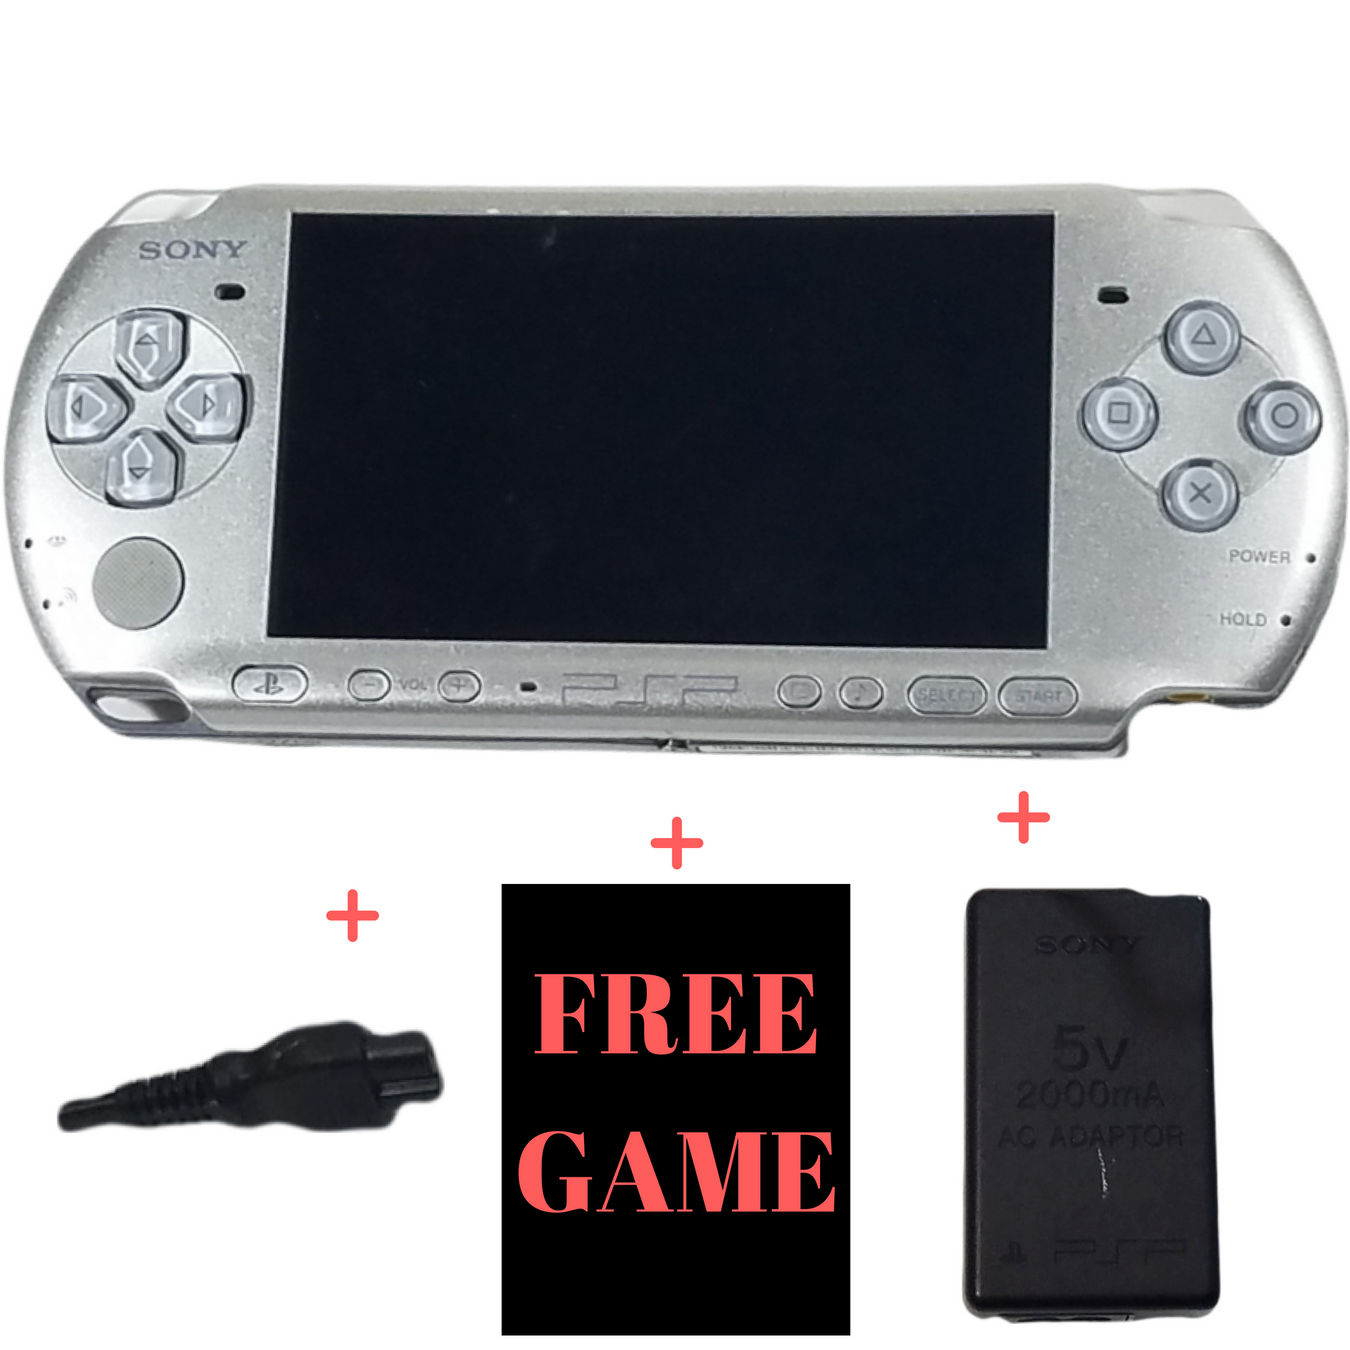 PlayStation Portable Consoles